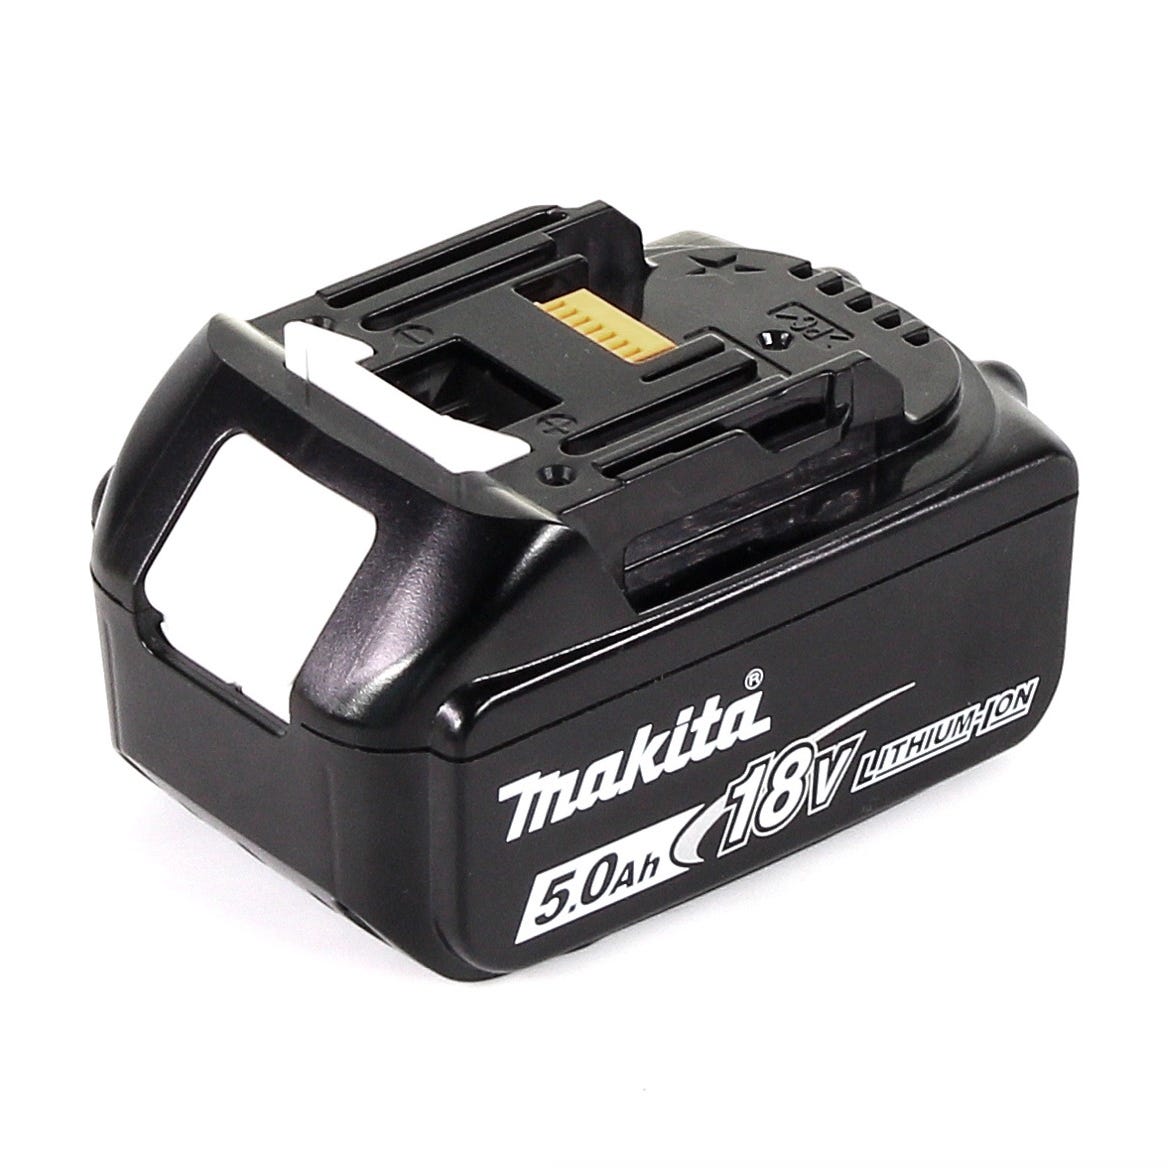 Makita DDF 485 T1J 18 V Li-Ion Perceuse visseuse sans fil Brushless 13 mm + Coffret MakPac + 1 x Batterie 5,0 Ah - sans 3